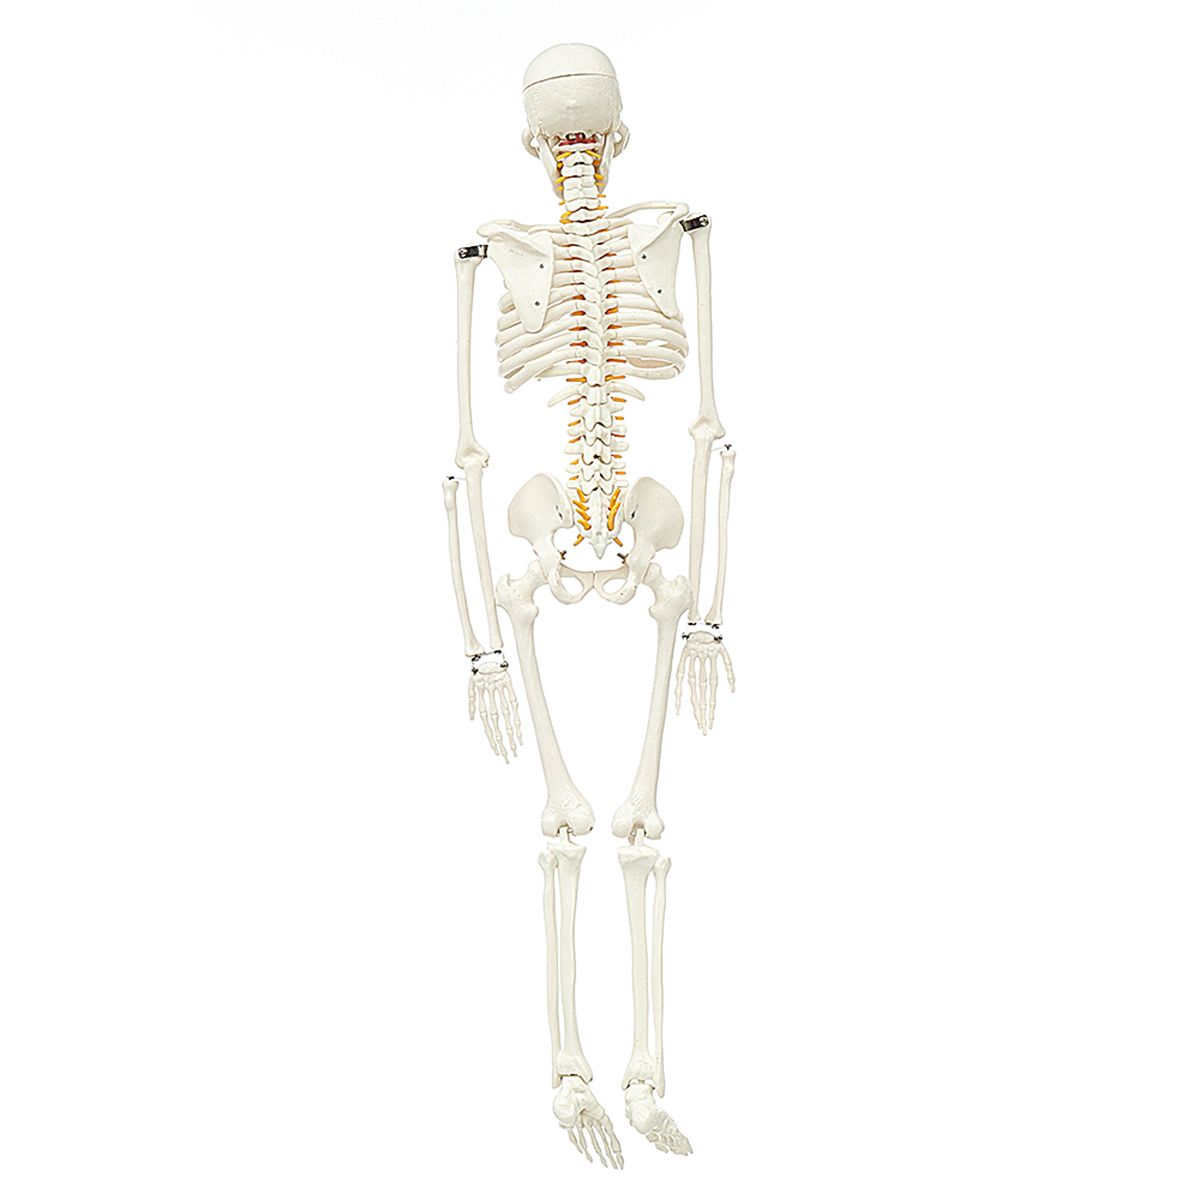 85cm-Lifesize-Detachable-Human-Skeleton-Bone-Model-Removable-Arms-Legs-w-Stand-Anatomical-Model-Deco-1482675